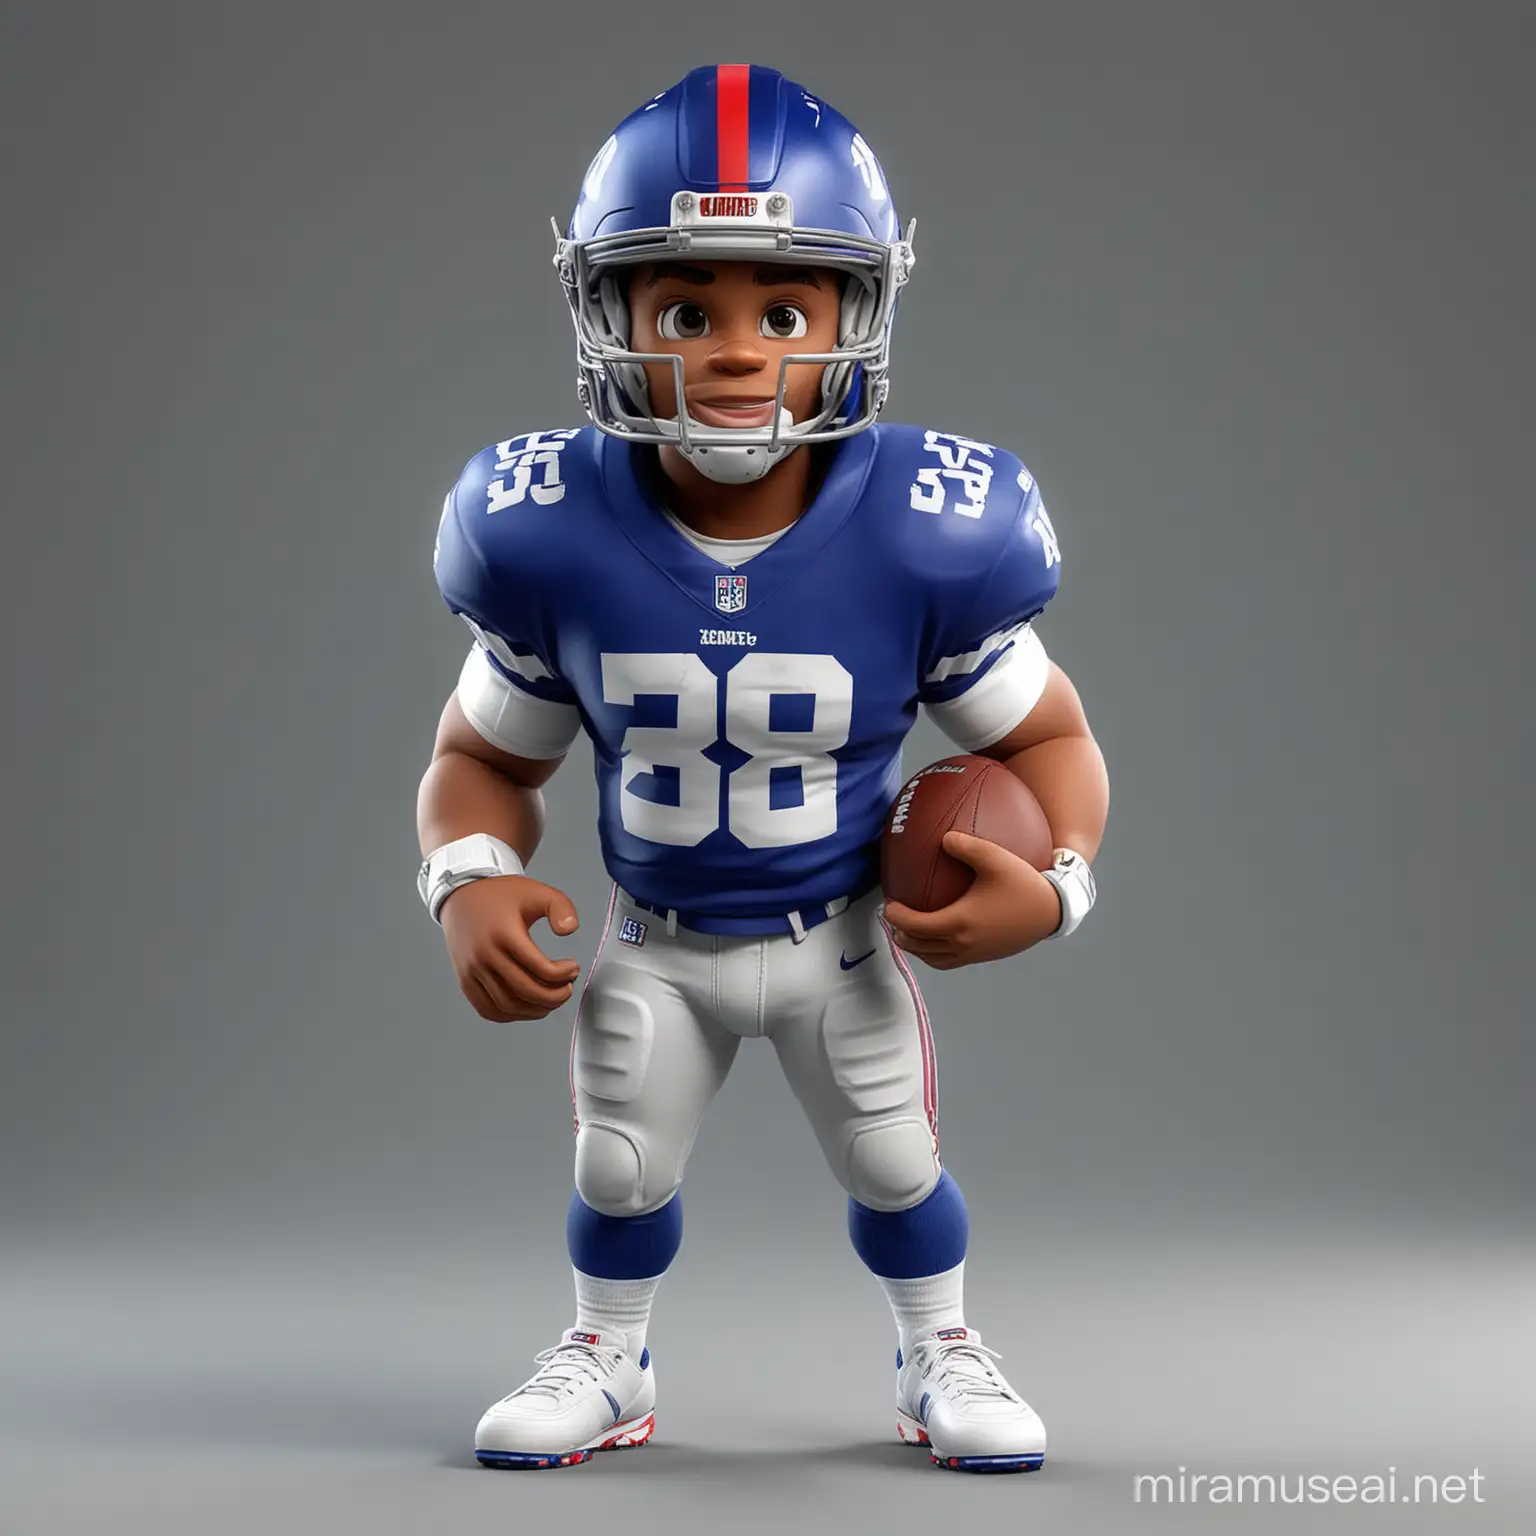 Cartoon Style 3D Rendered NFL Player Saquon Barkley Lookalike in New York Giants Kit